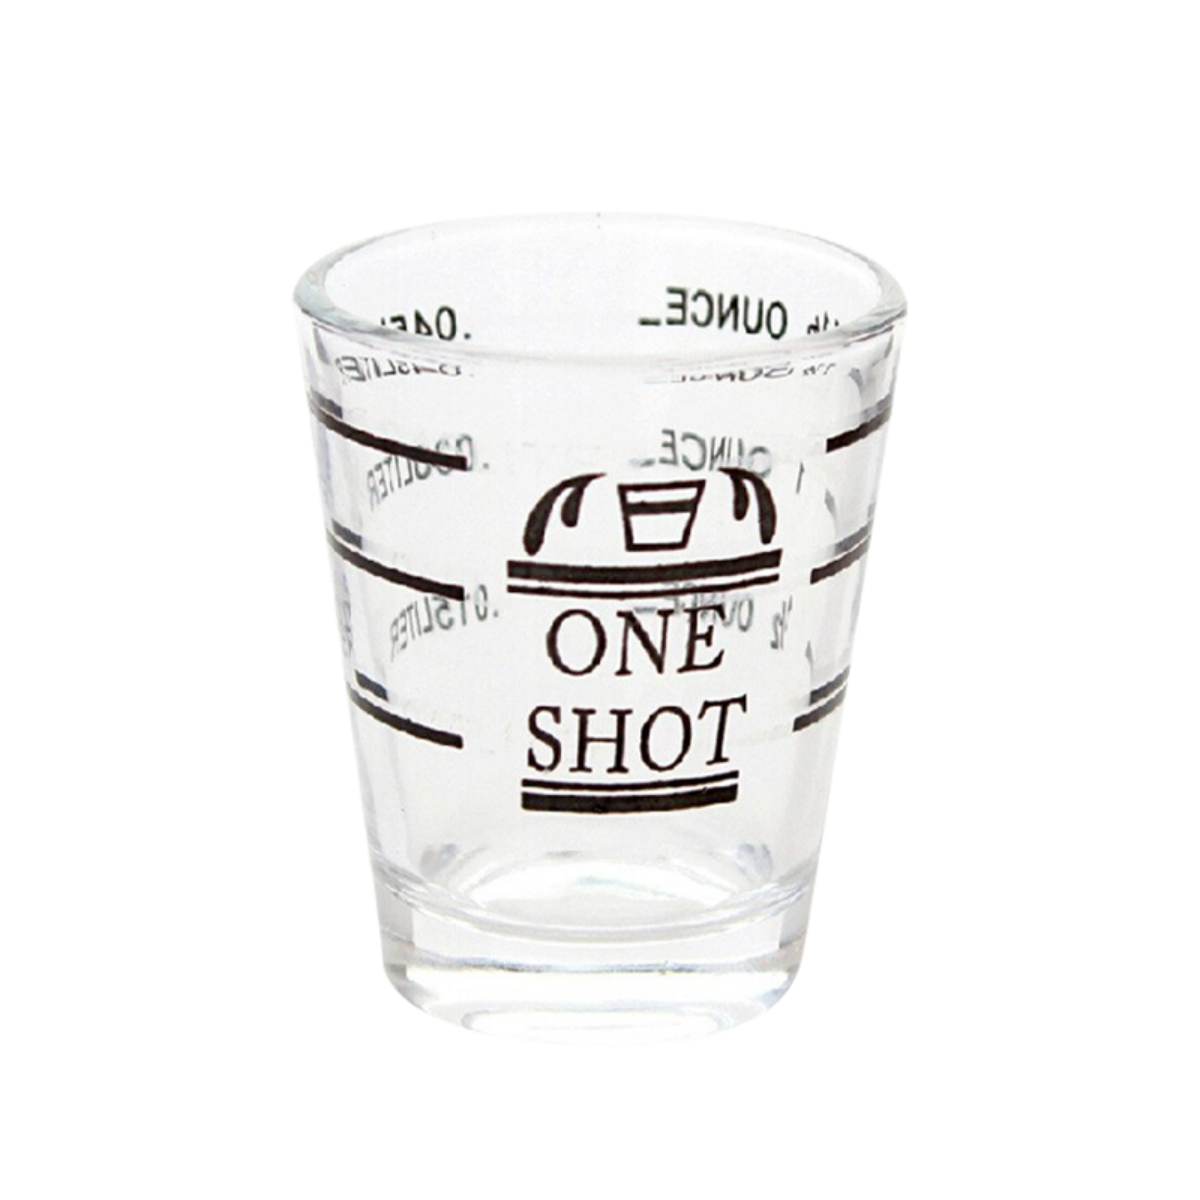 ONE SHOT PROFESSIONAL SHOT GLASS - 2OZ - Bar Objects